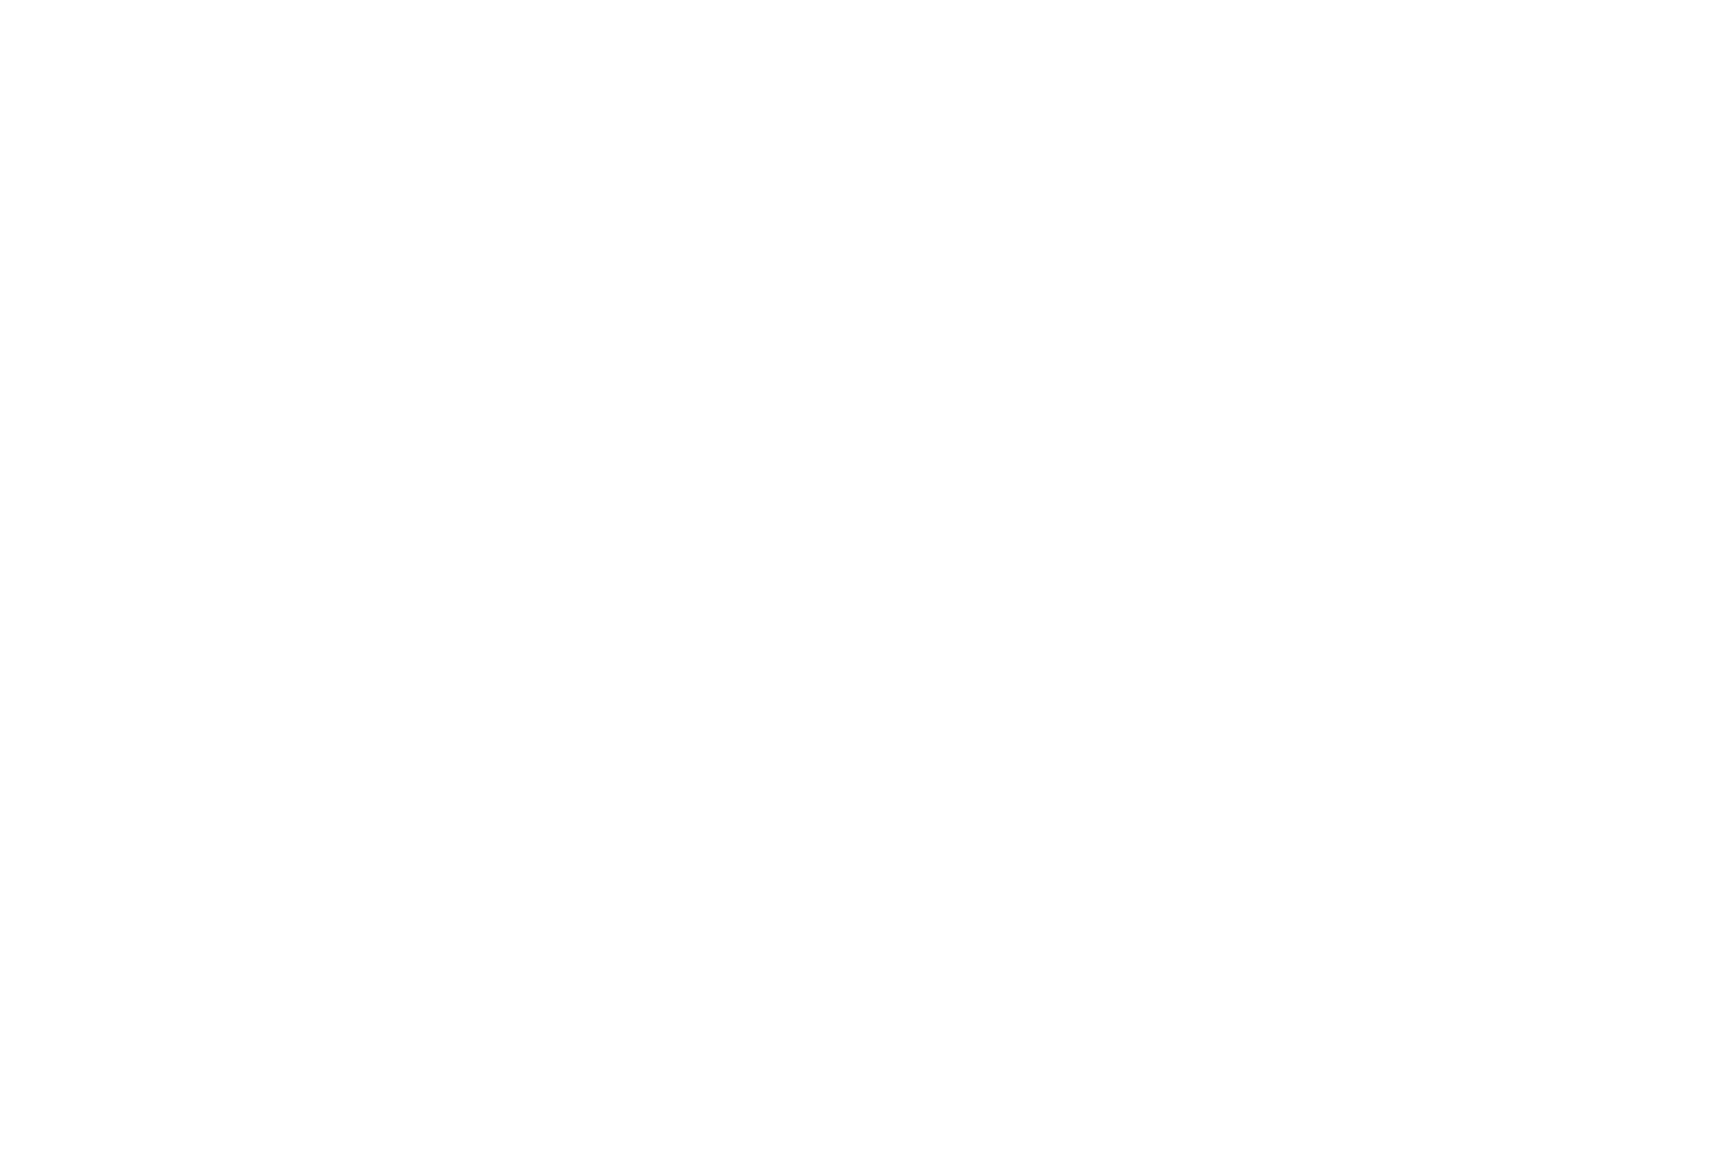 WINNER                             Best One Minute Narrative Actor - Narrative Film Festival - 2021.png